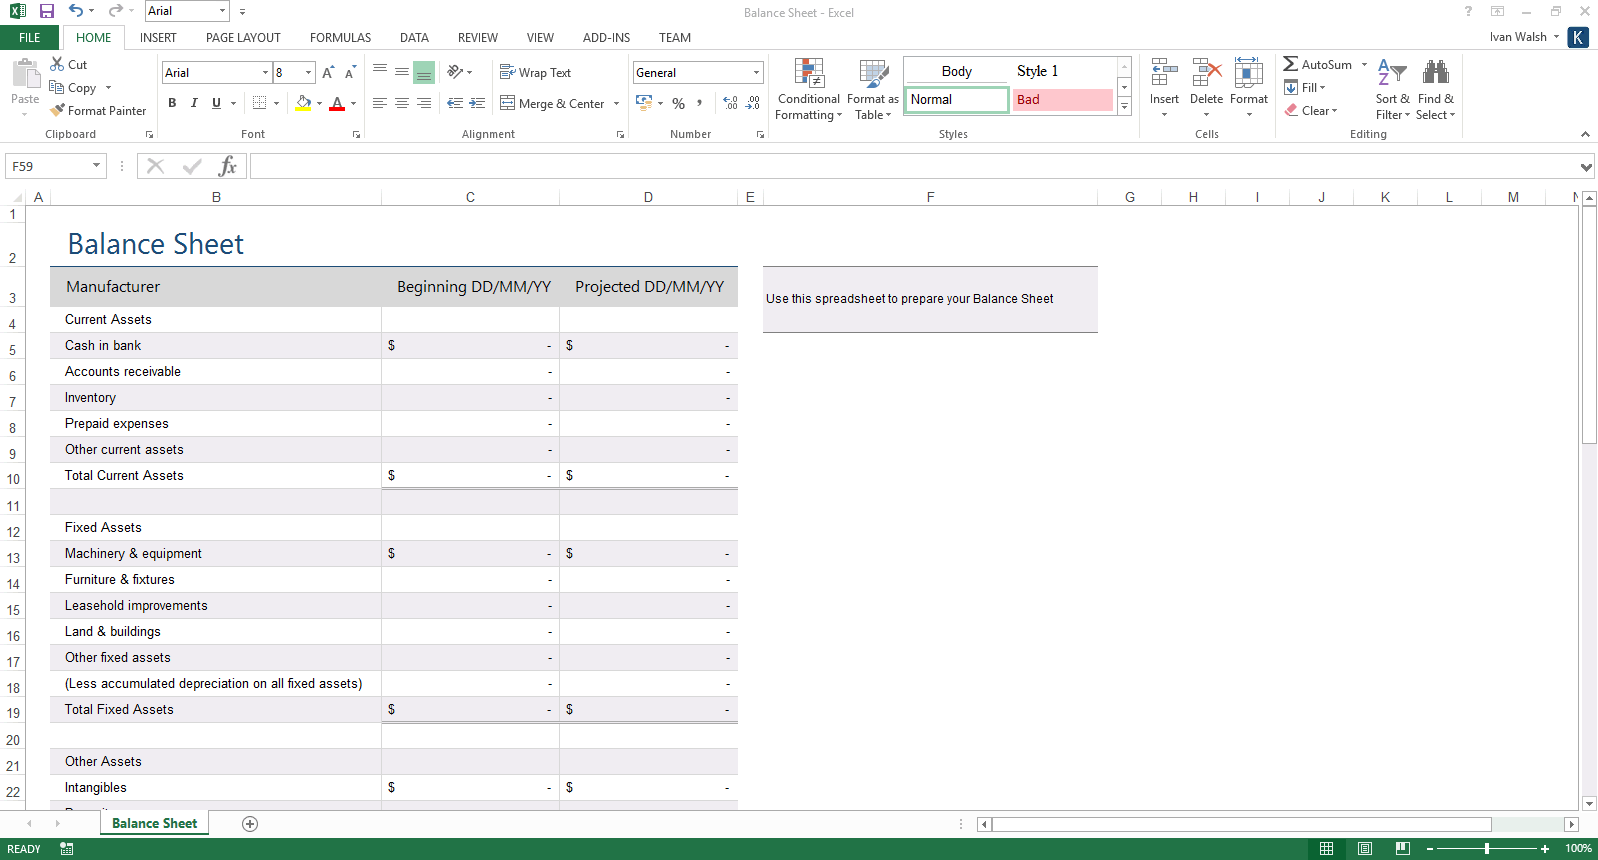 Business Model Template Excel from klariti.com